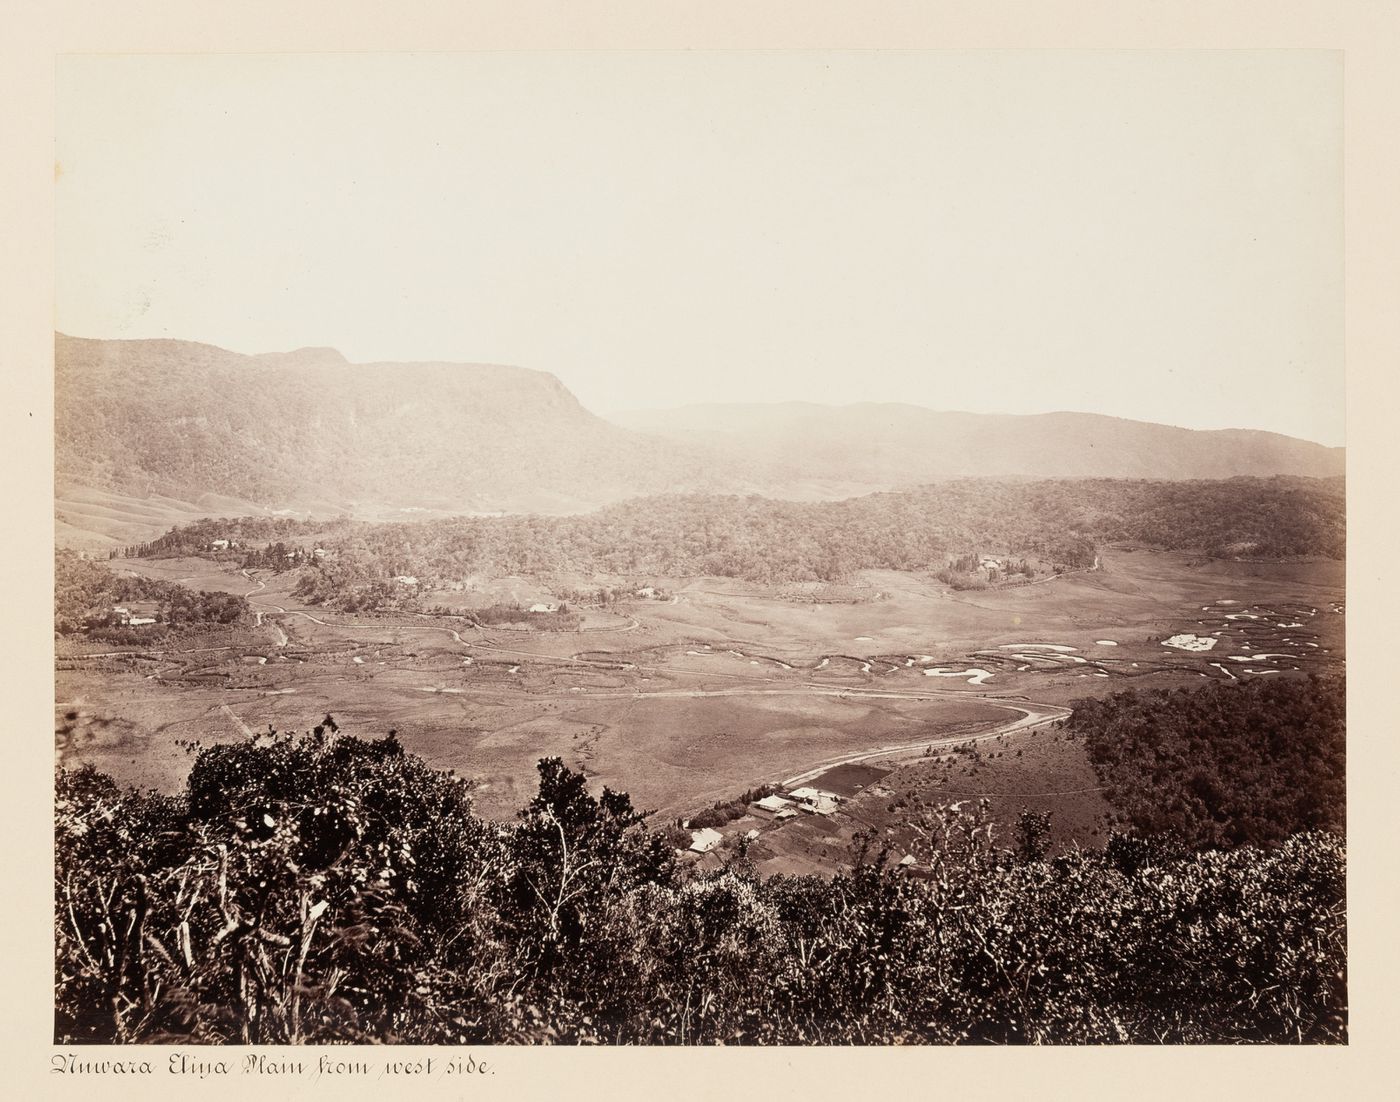 View of the Nuwara Eliya Plain from the west side, Nuwara Eliya, Ceylon (now Sri Lanka)